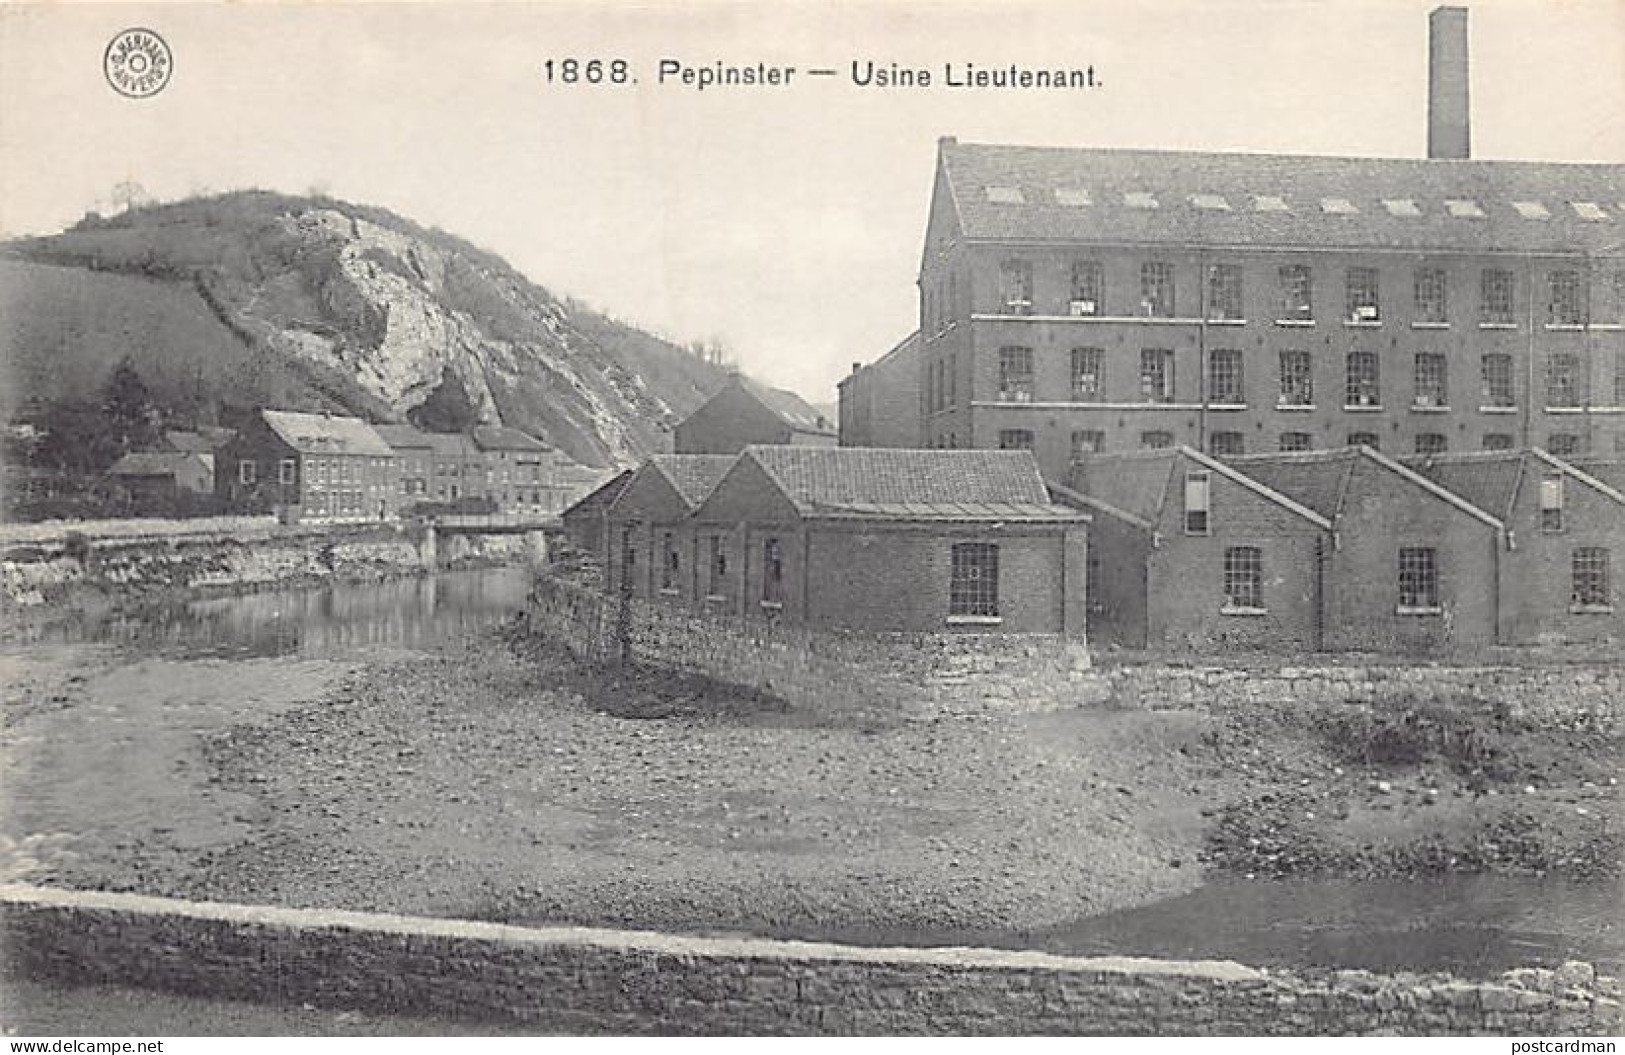 PEPINSTER (Liège) Usine Lieutenant - Ed. G. Hermans 1868 - Pepinster